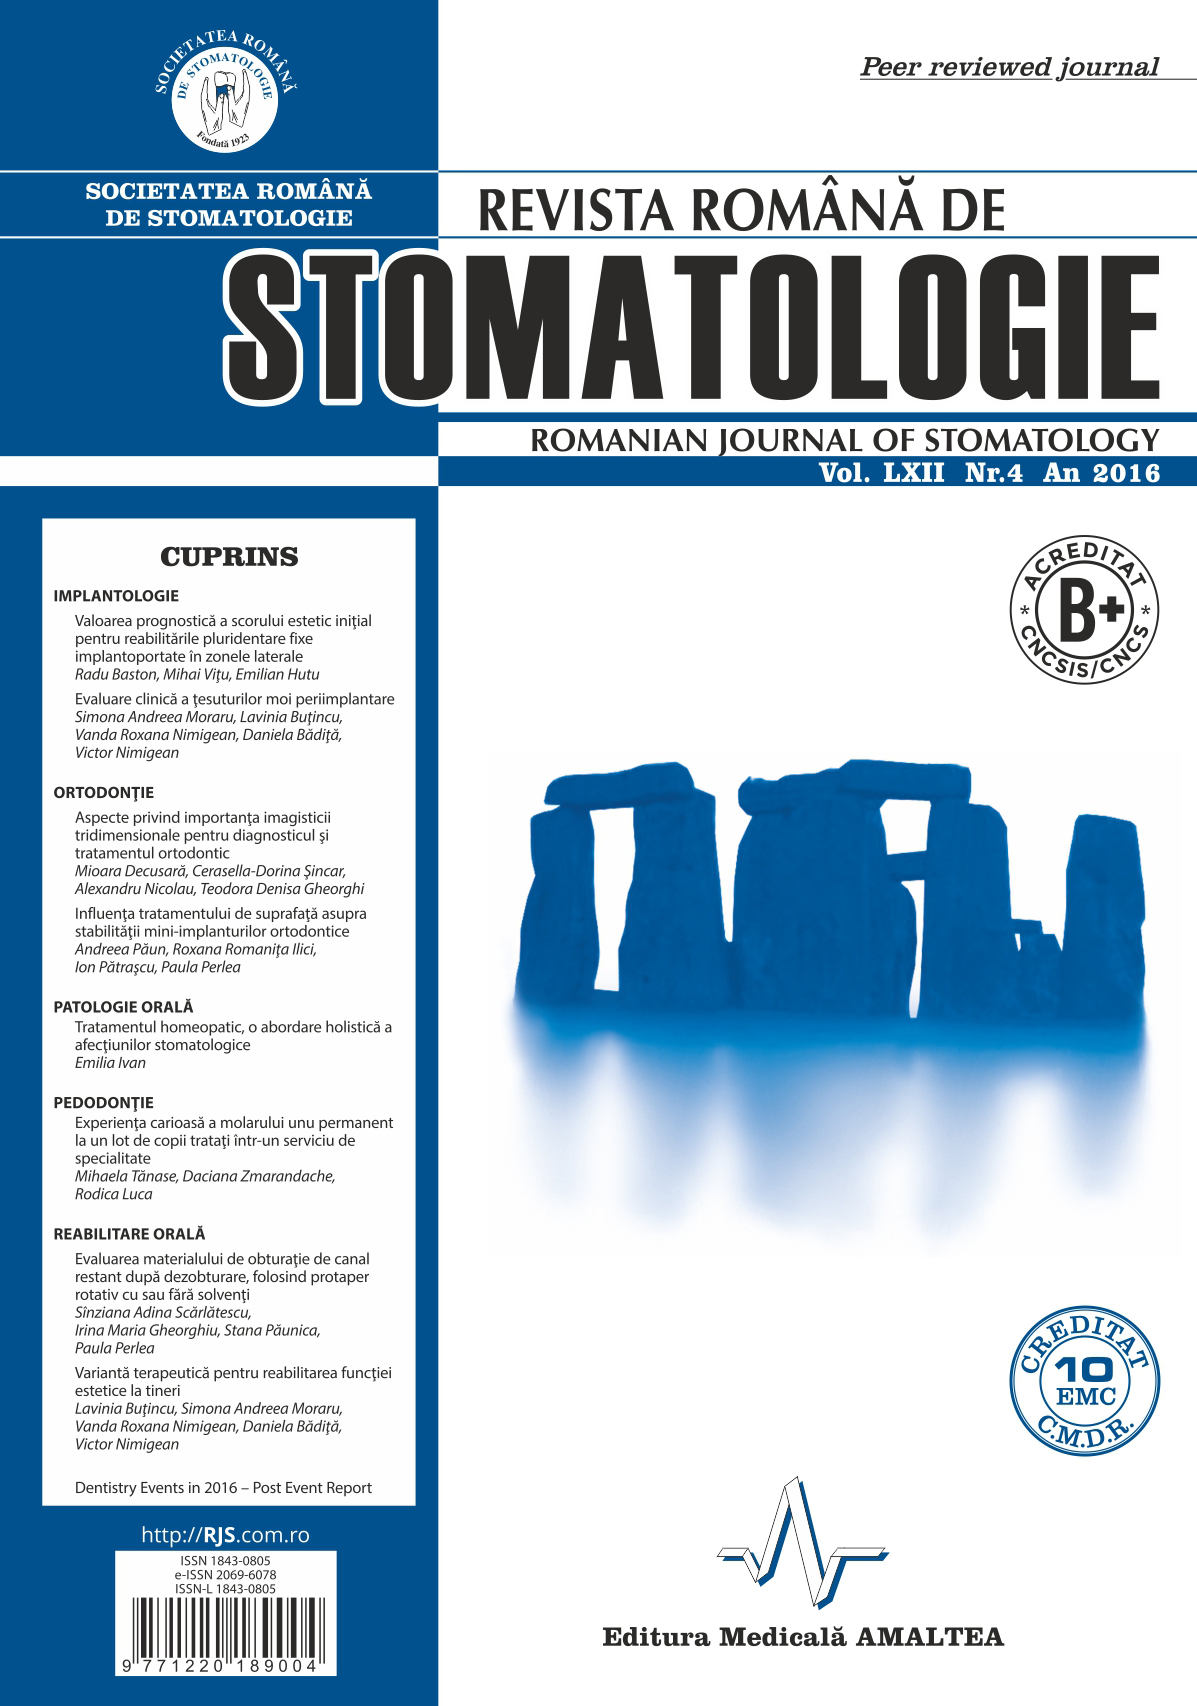 Revista Romana de STOMATOLOGIE - Romanian Journal of Stomatology, Vol. LXII, Nr. 4, An 2016